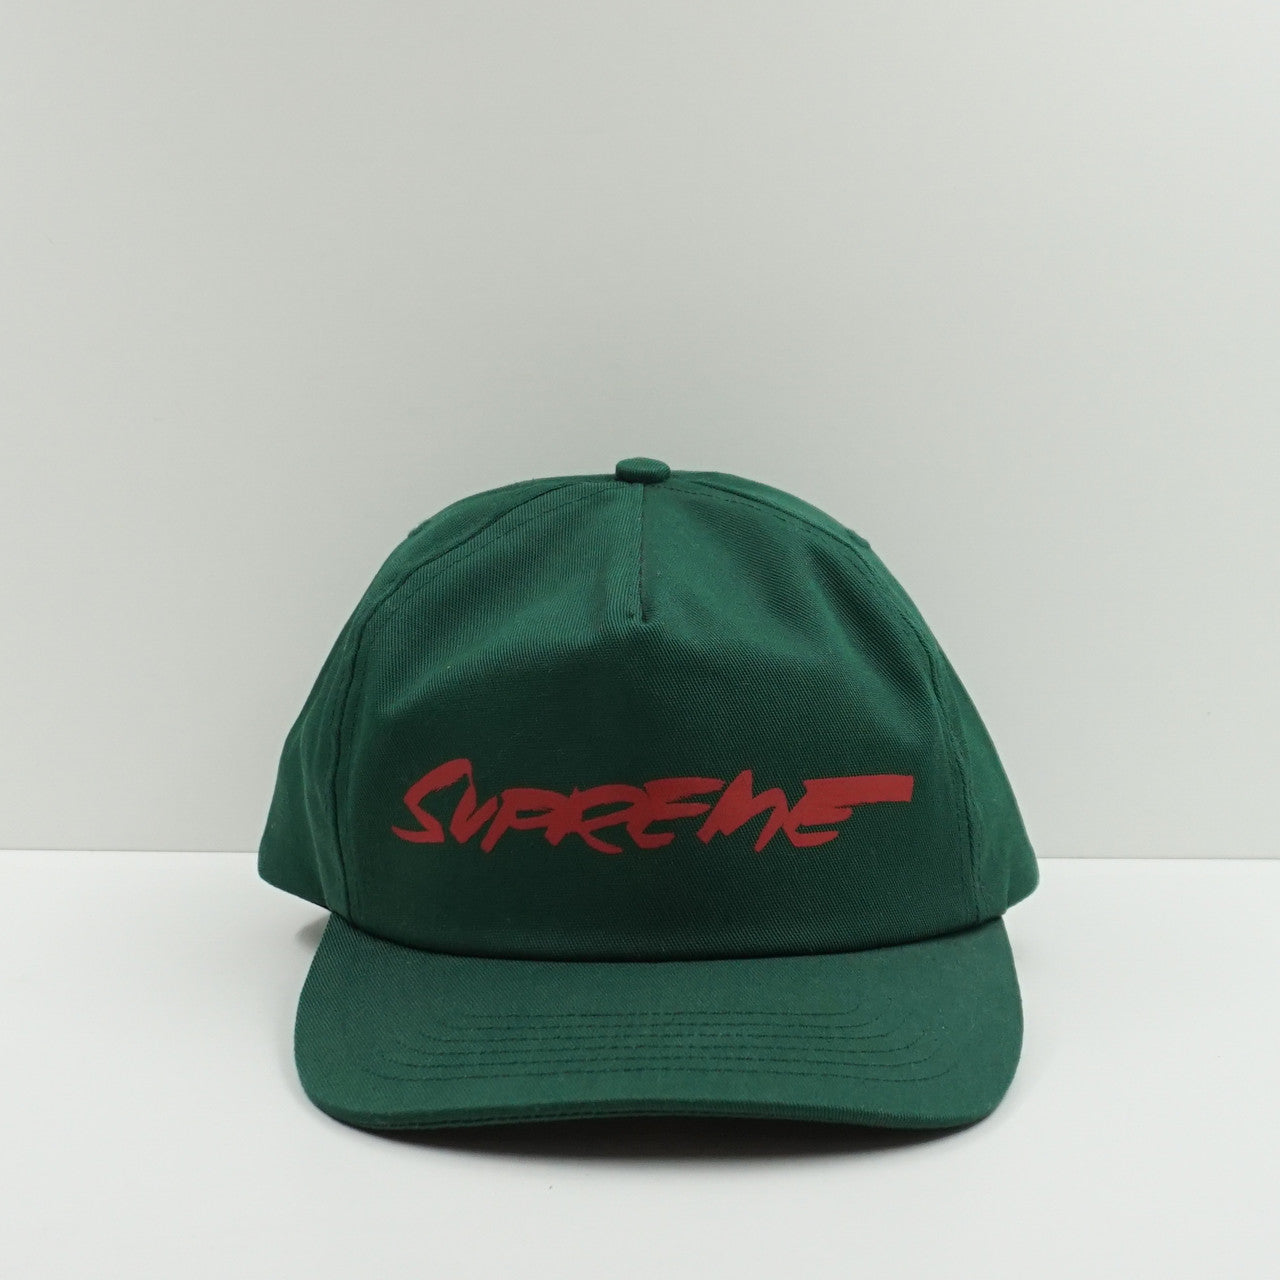 Supreme Logo Green Adjustable Cap